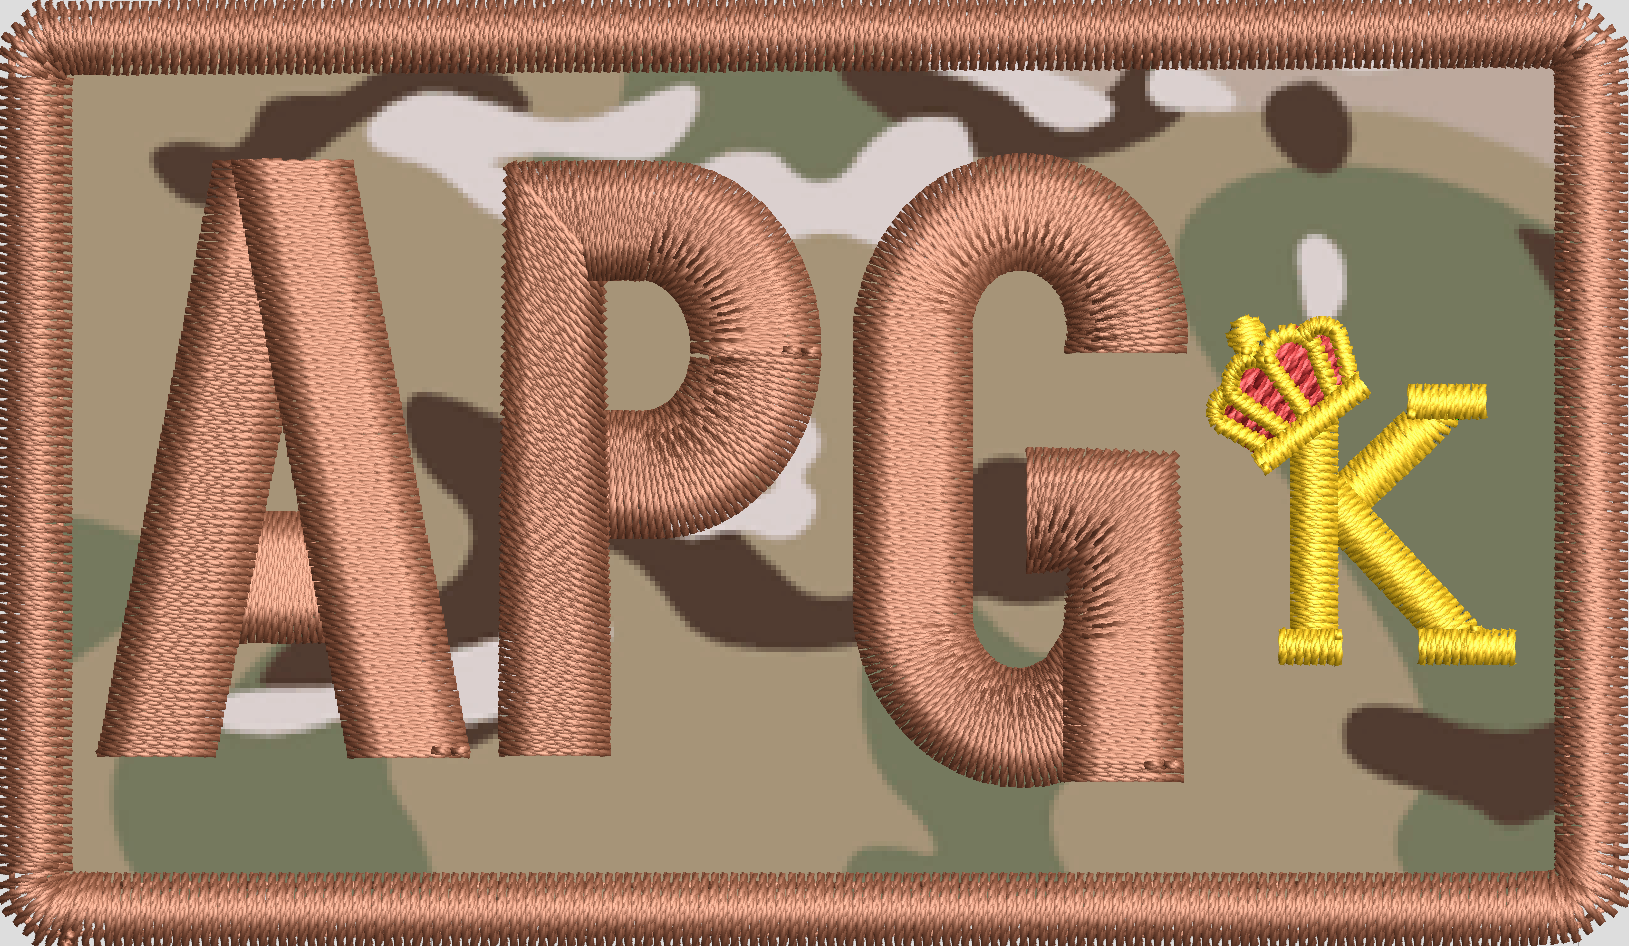 APG - Combat King - Duty Identifier Patch on OCP Fabric